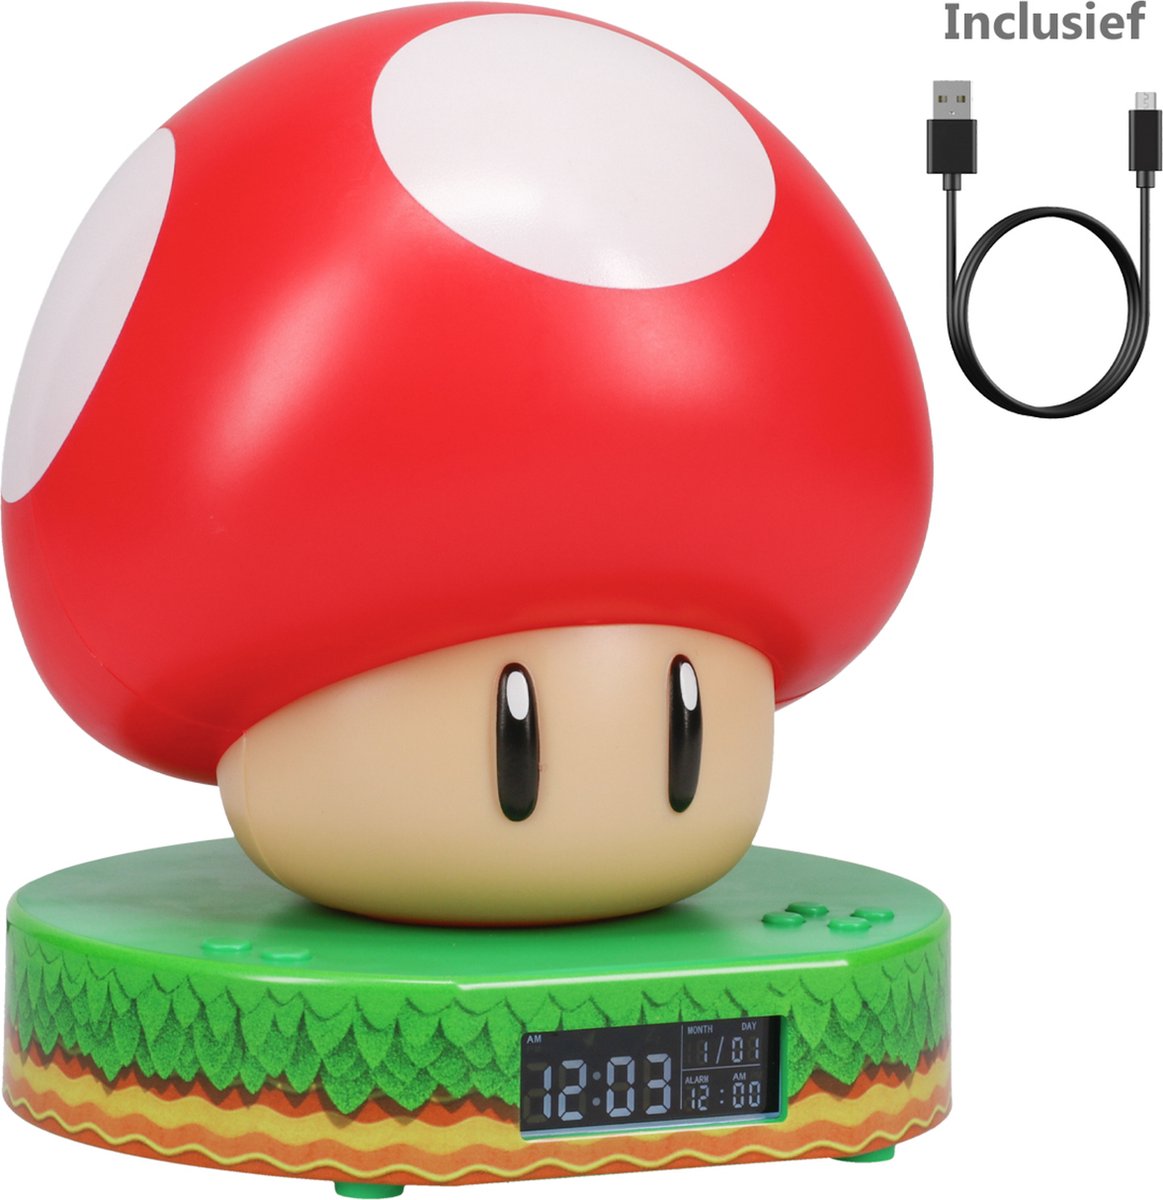 Nintendo Super Mario Mushroom Alarm Clock / Wekker met USB kabel